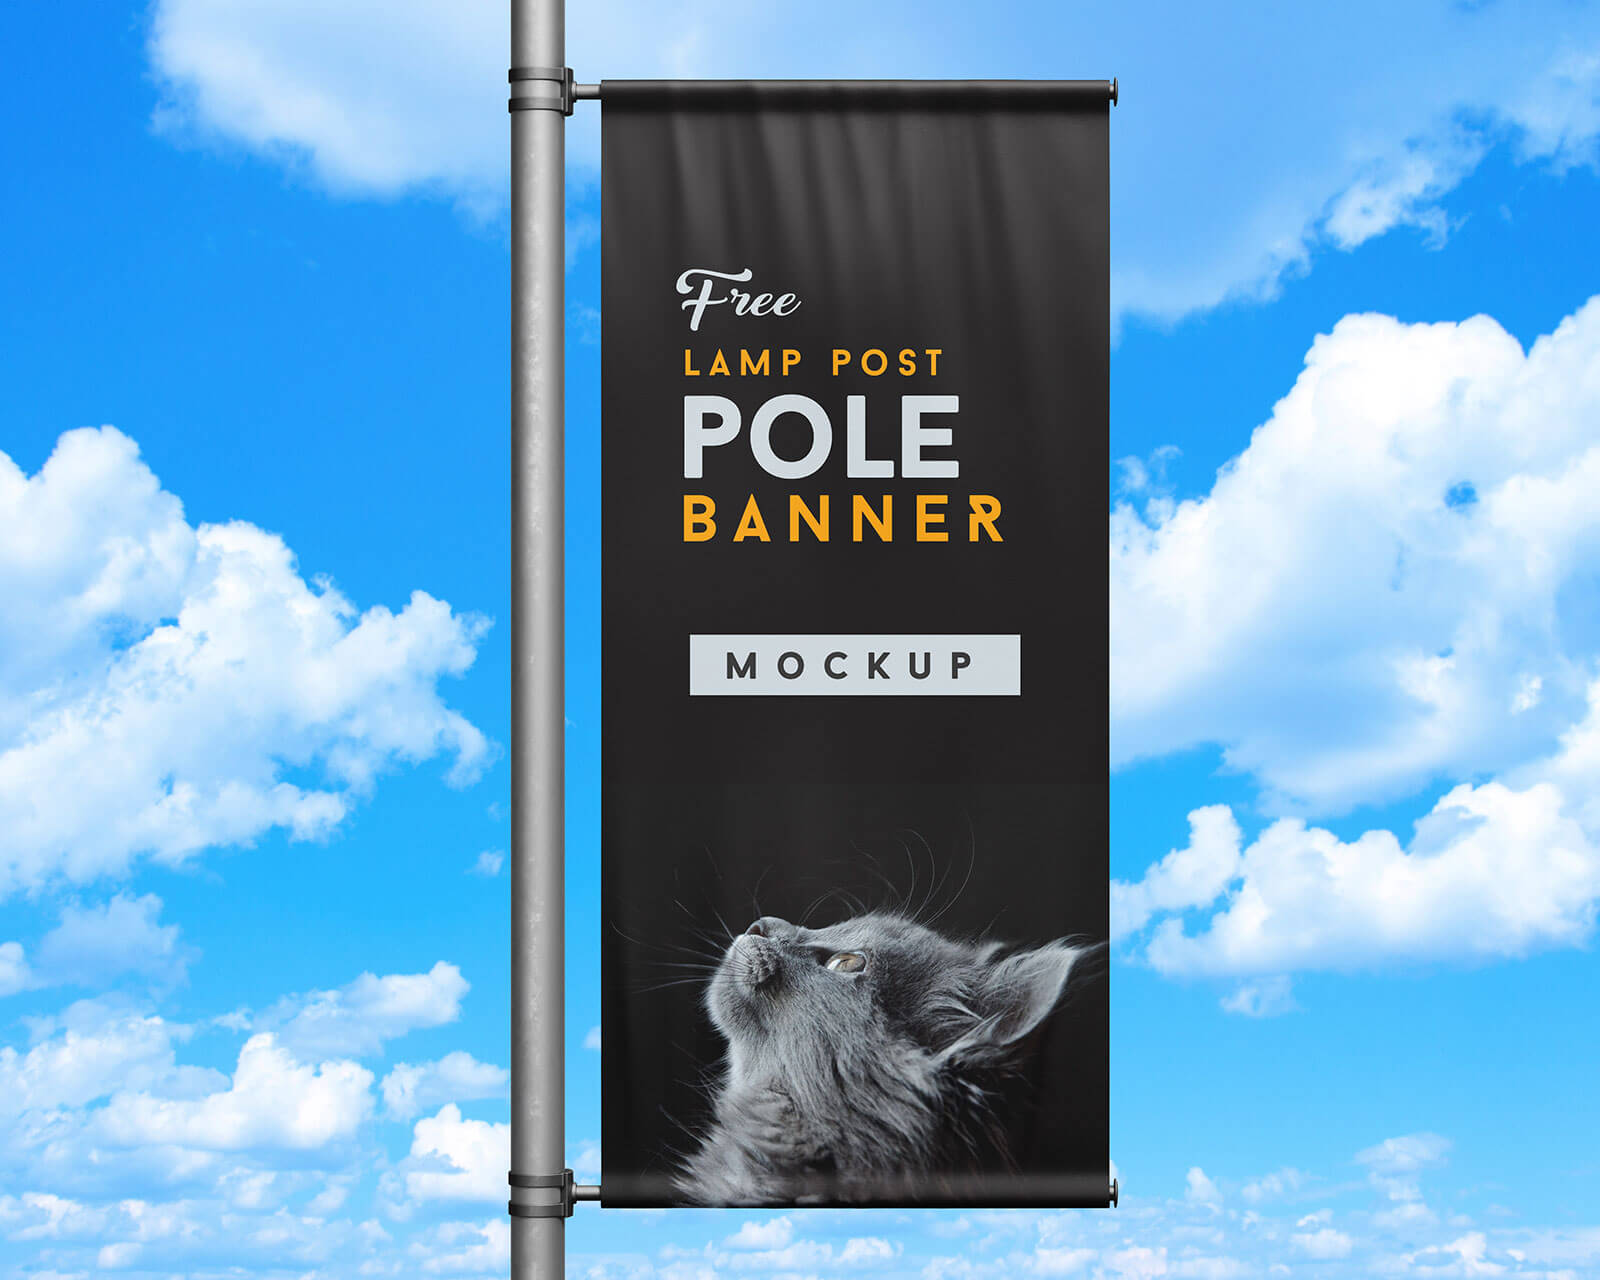 Free-Outdoor-Advertising-Street-Lamp-Post-Pole-Banner-Mockup-PSD-Set-Free (3)